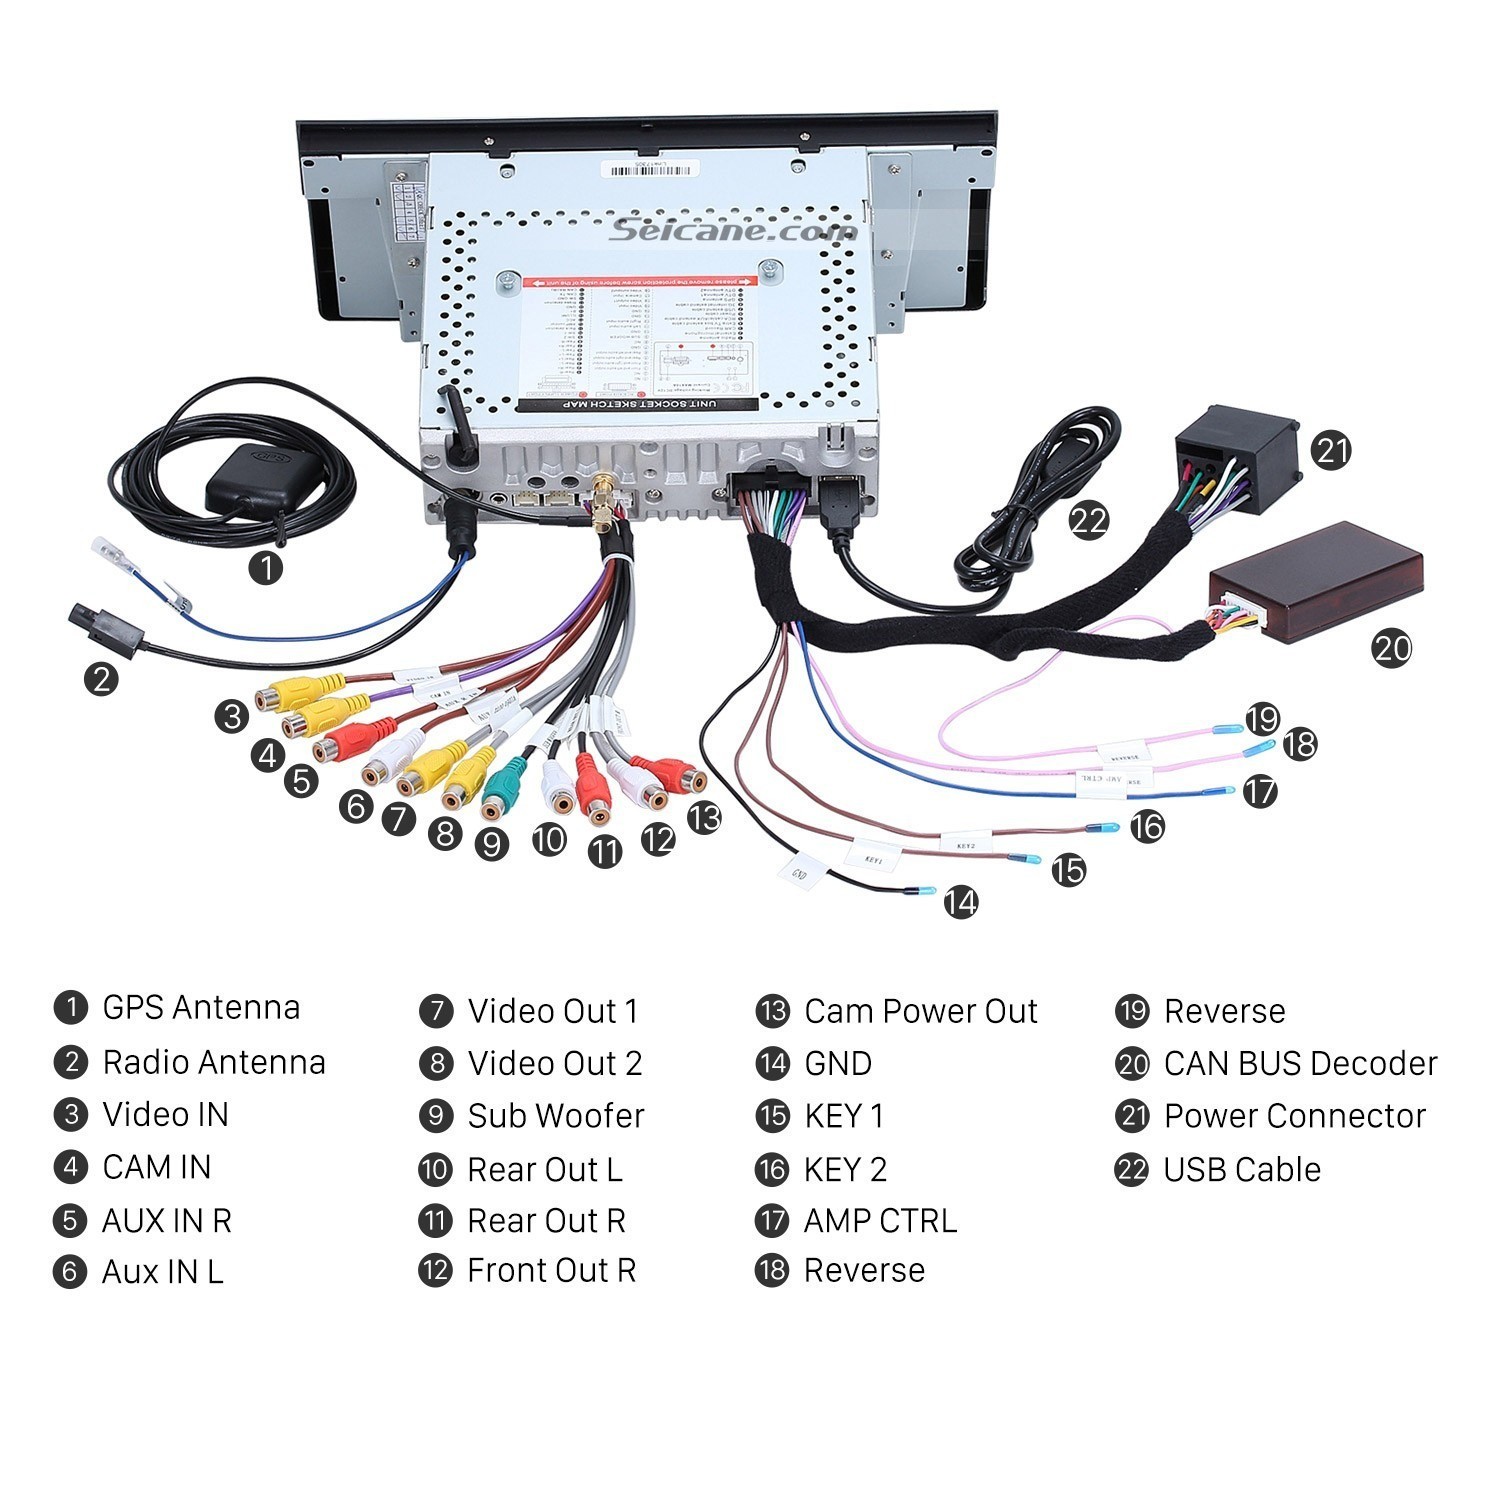 Wiring Diagram 20 Amp Plug Inspirationa Diagram Car Best Car Parts And Diagrams Insignia Se 2 0d – My